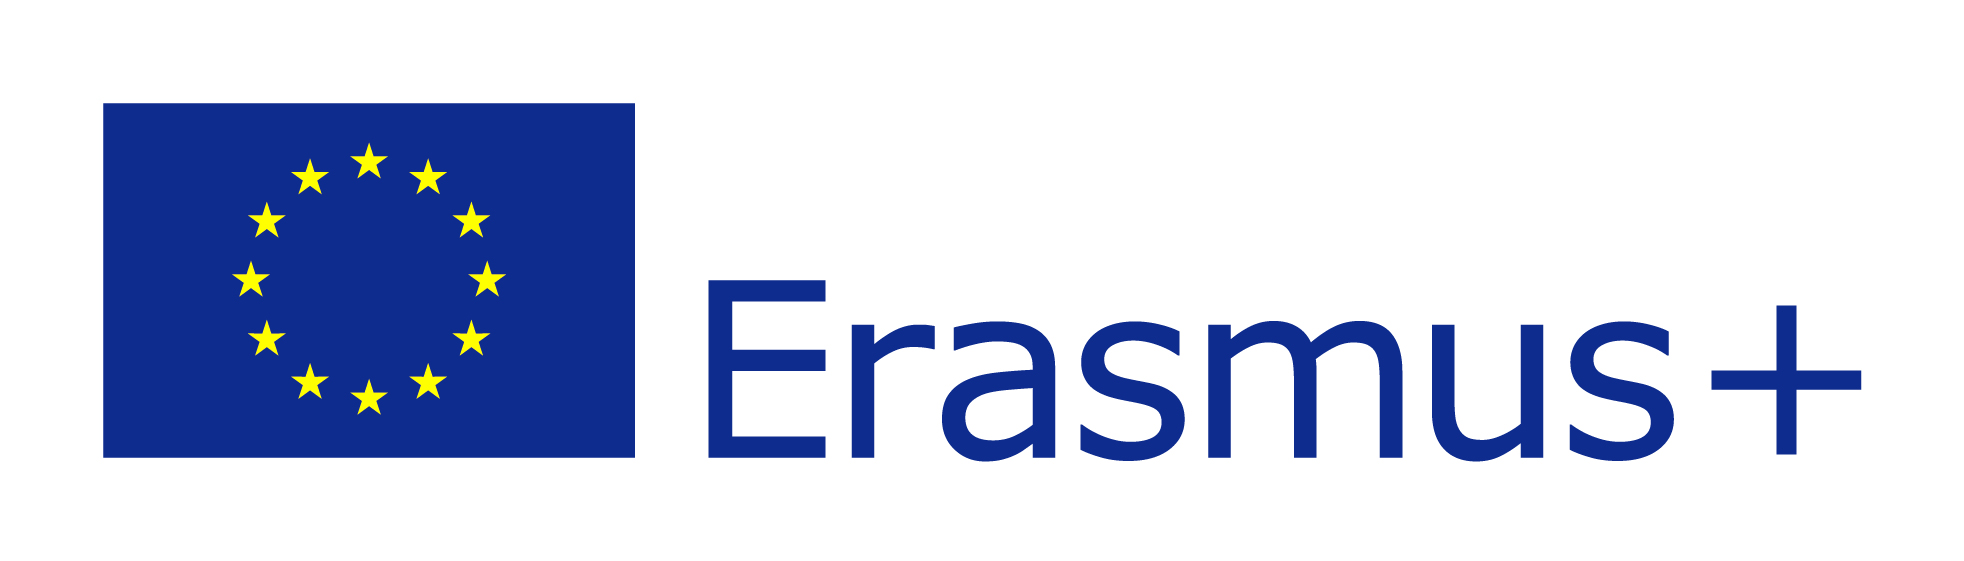 EU_flag-Erasmus_vect_POS_1.jpg